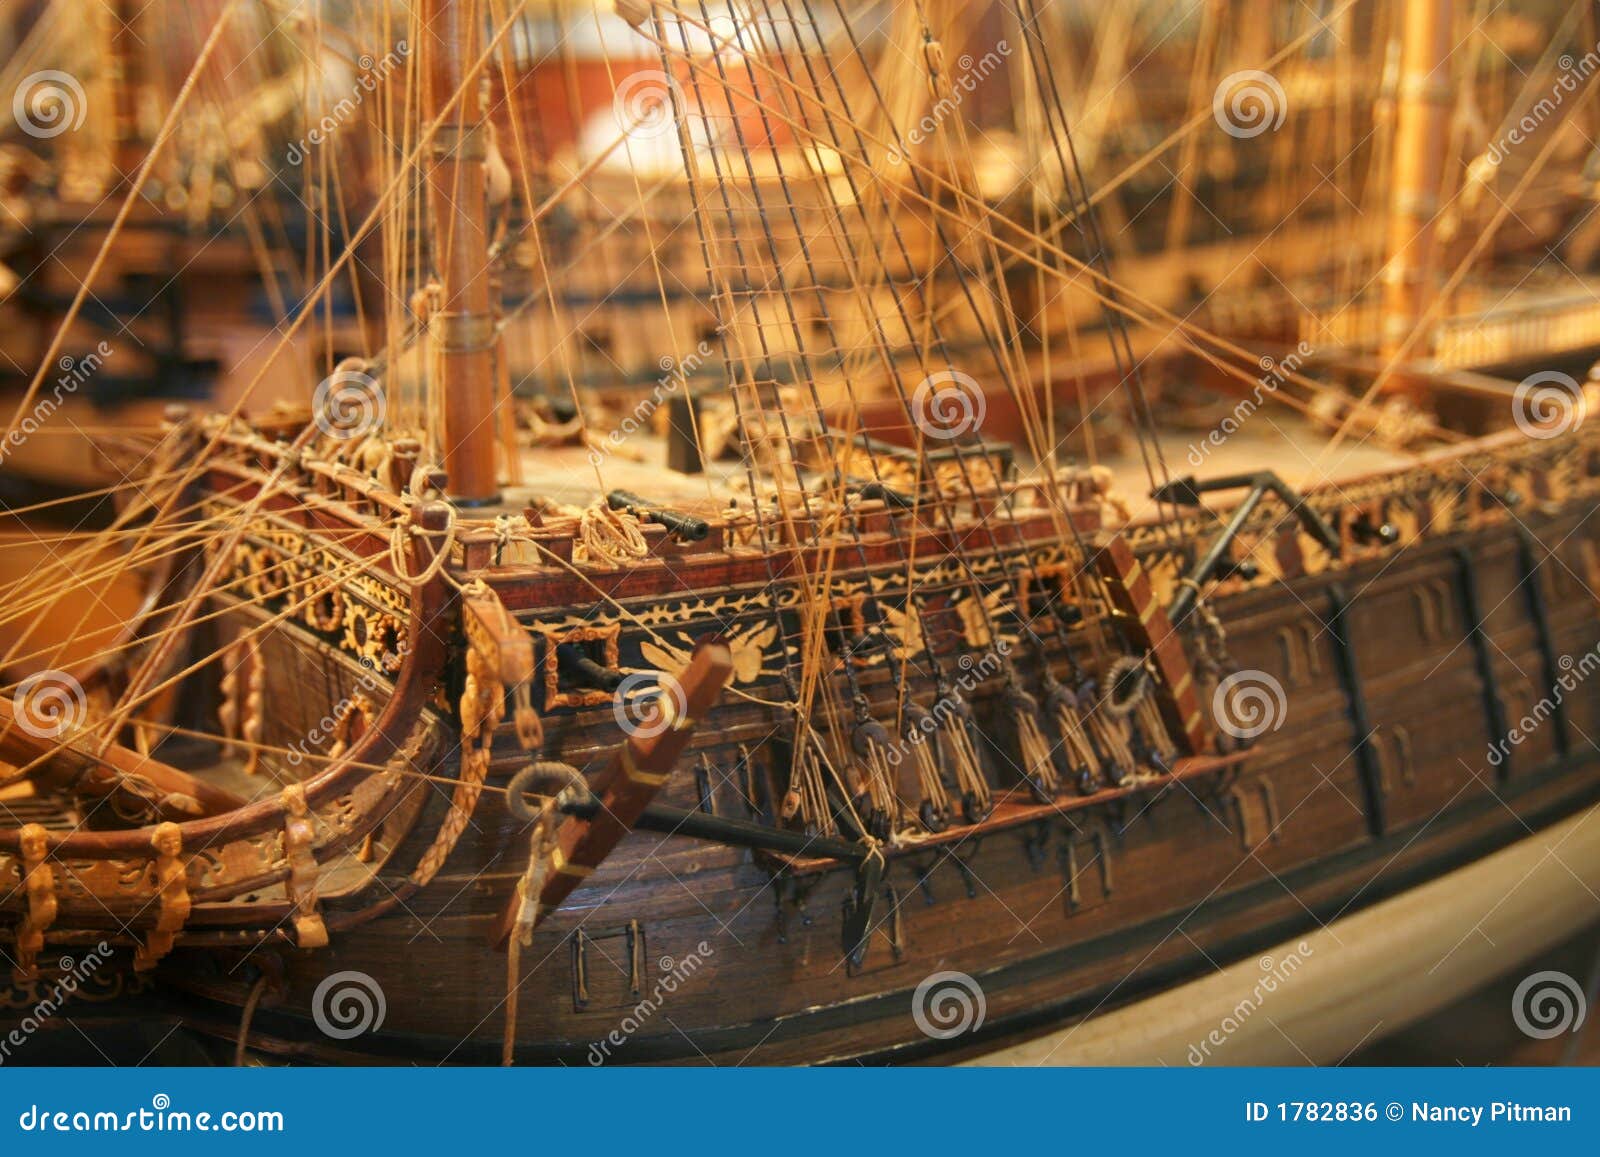 Detailed Model Of Old Mast Ship Royalty Free Stock Image - Image 